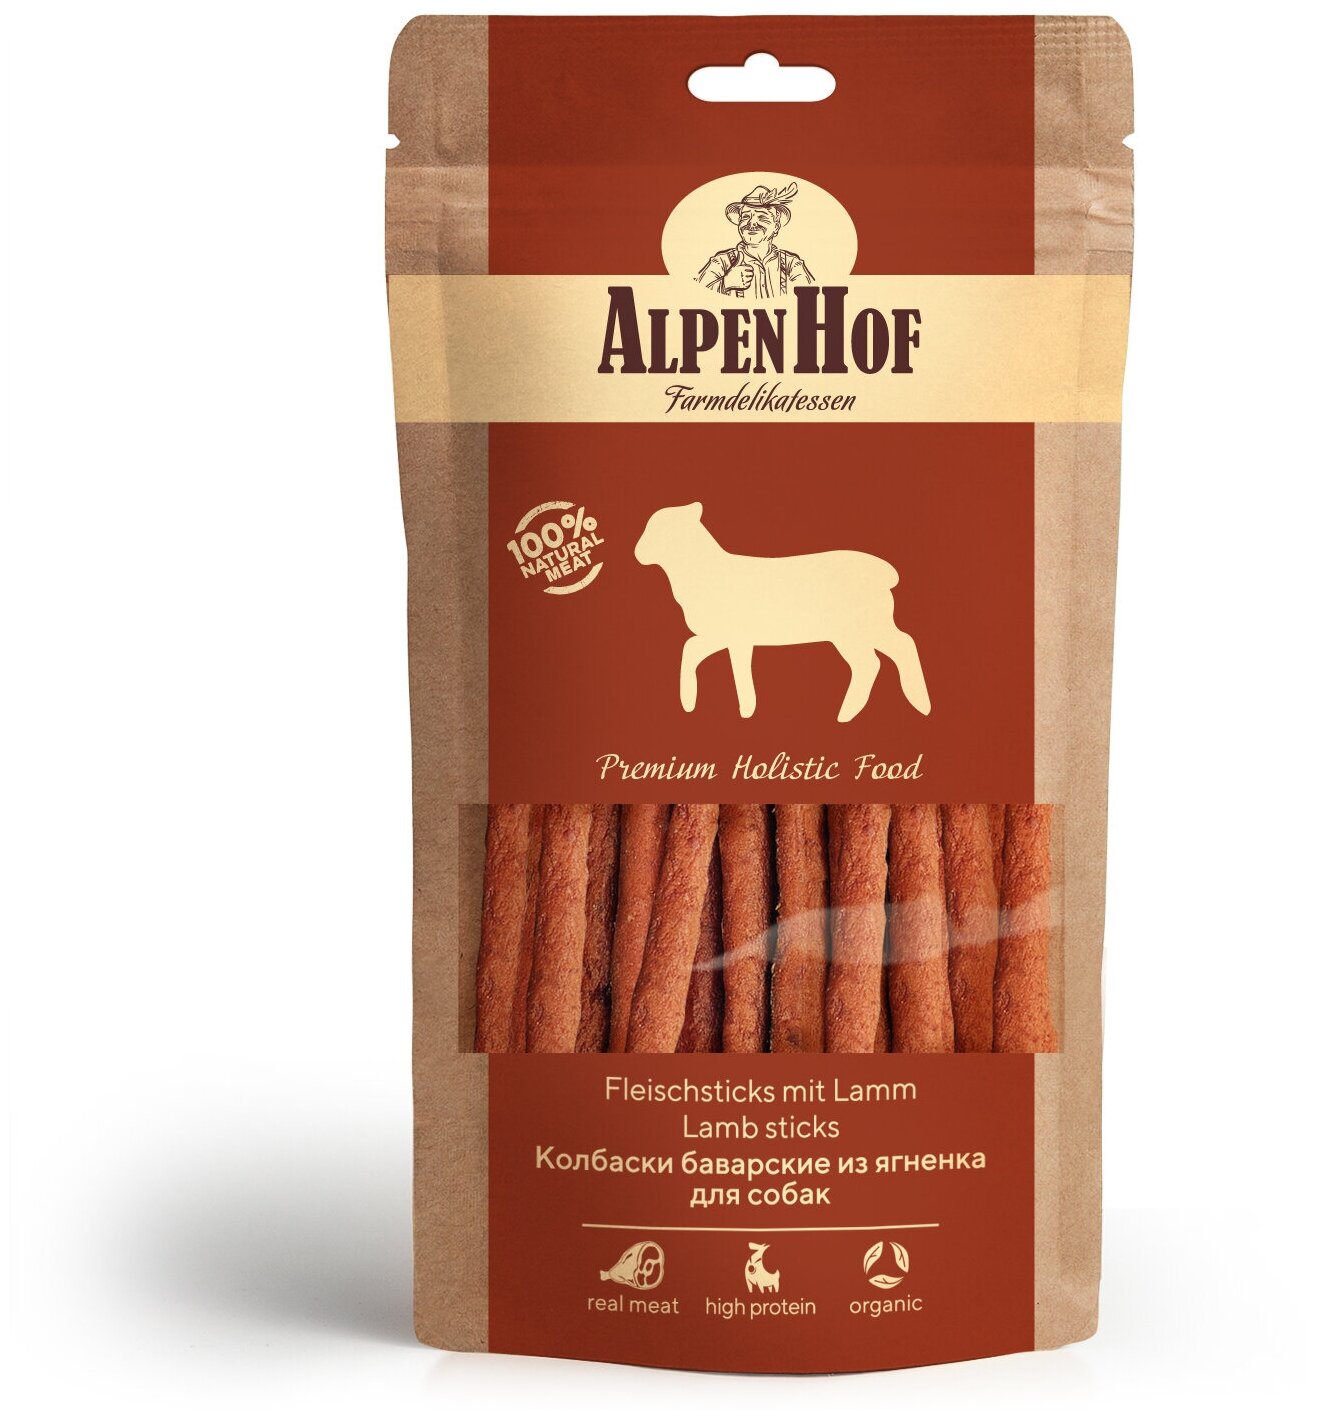 AlpenHof Лакомство для собак "Колбаски баварские из ягненка" пакет, 50 гр